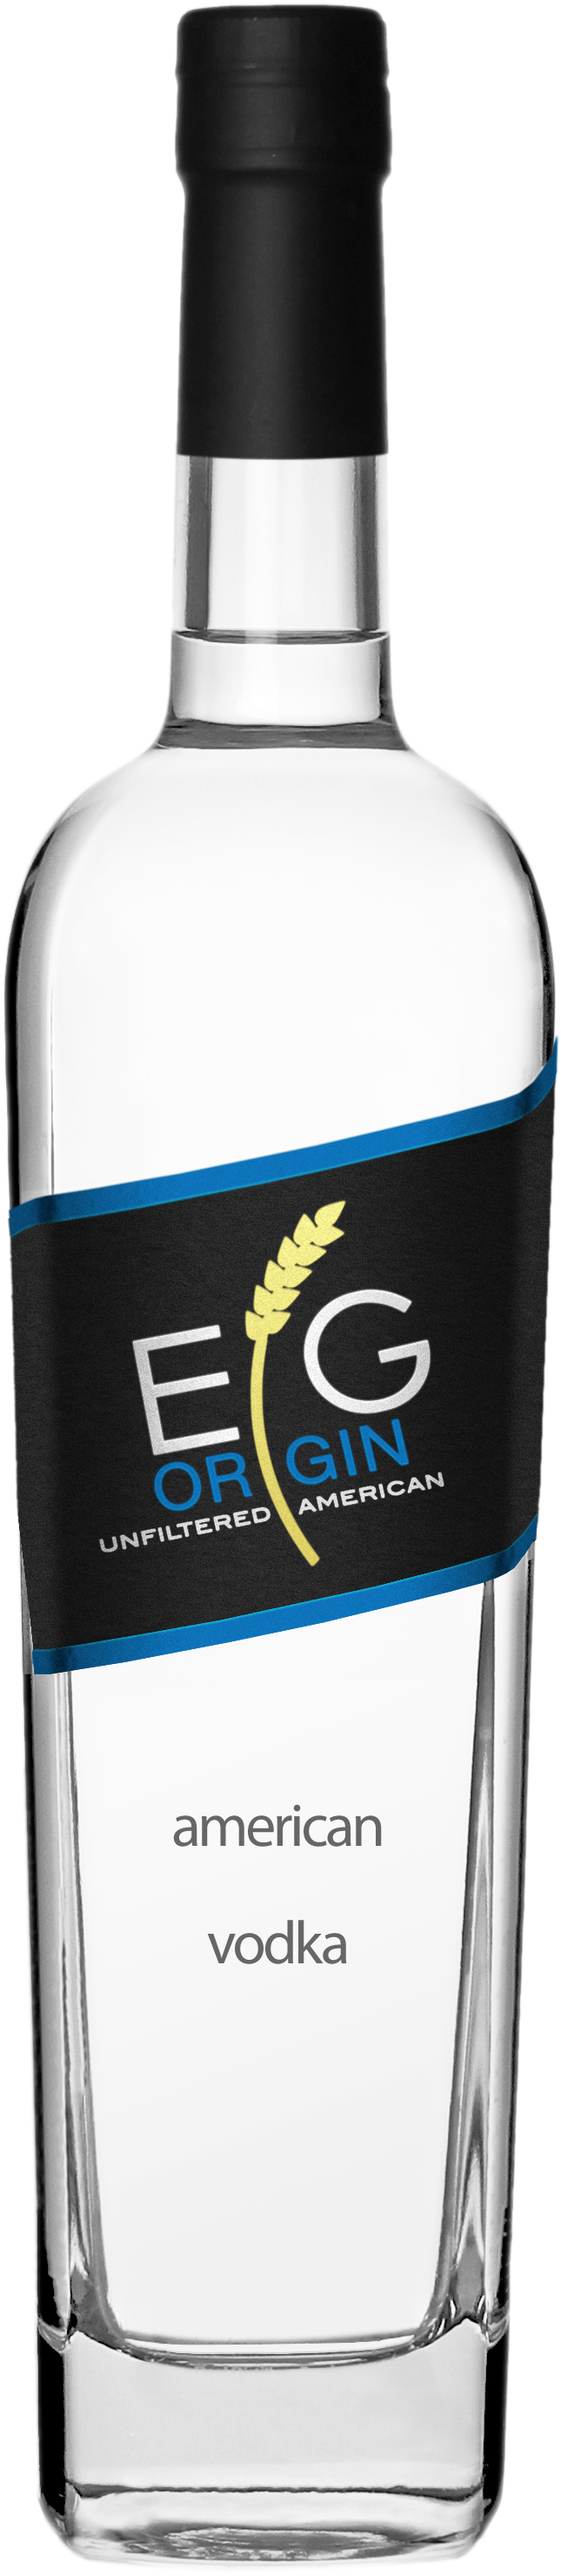 EG Origin Vodka